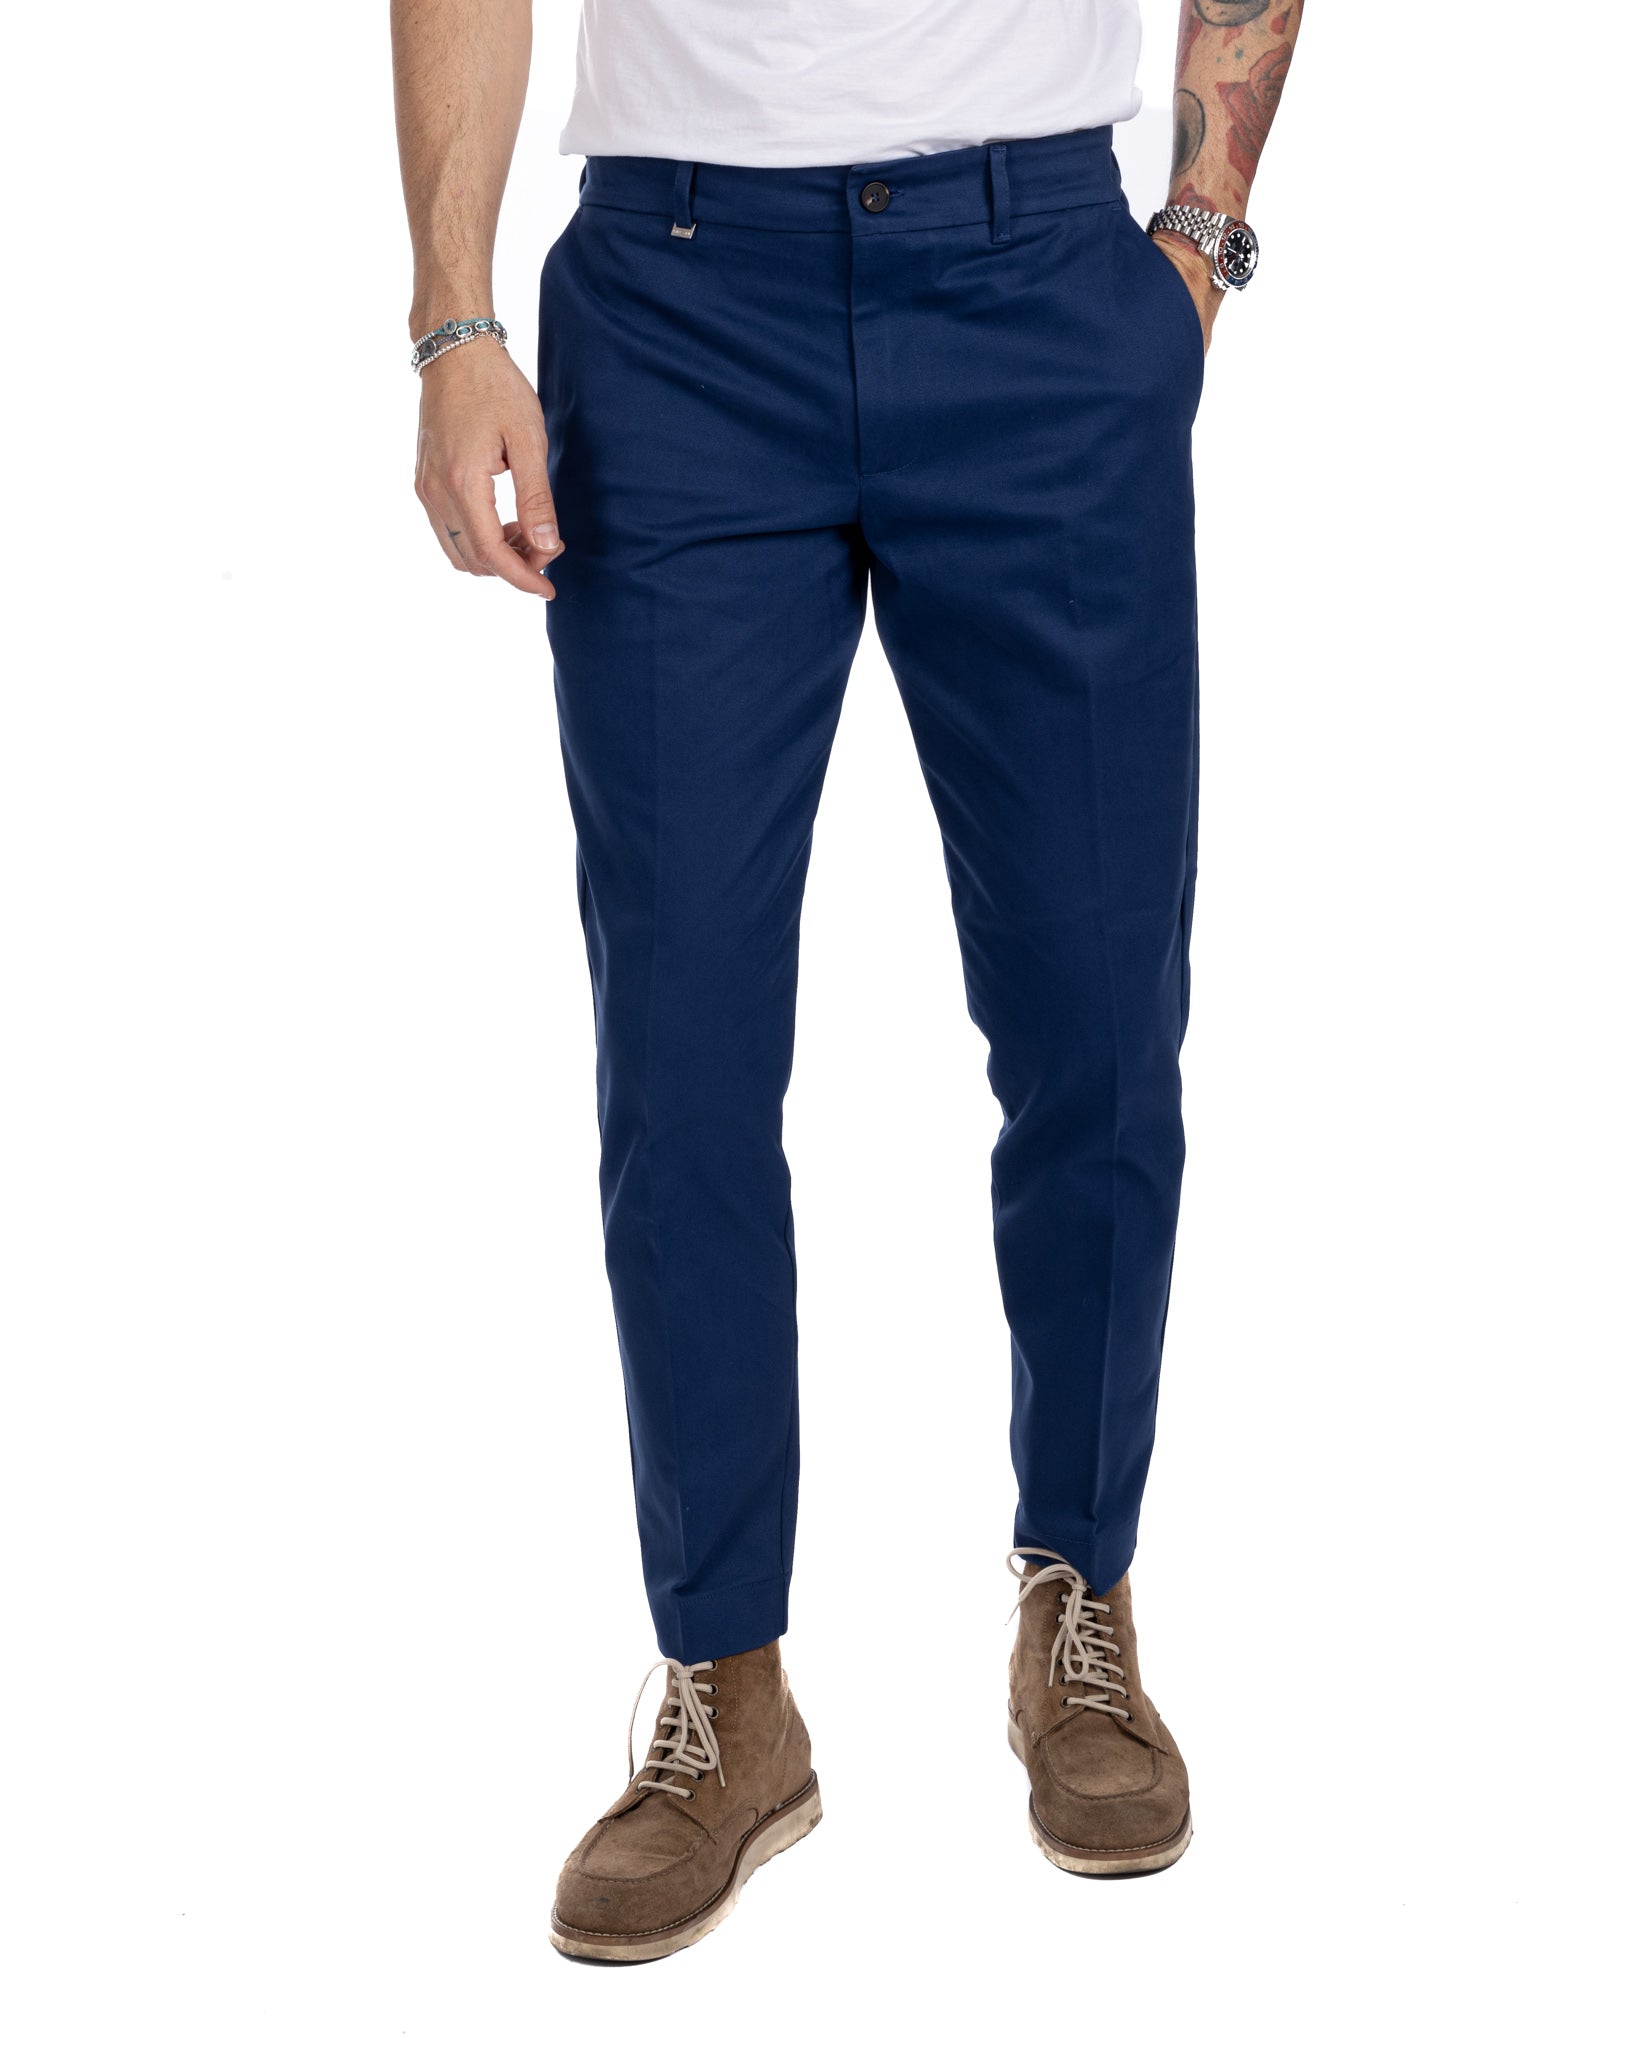 Elder - blue capri trousers in cotton